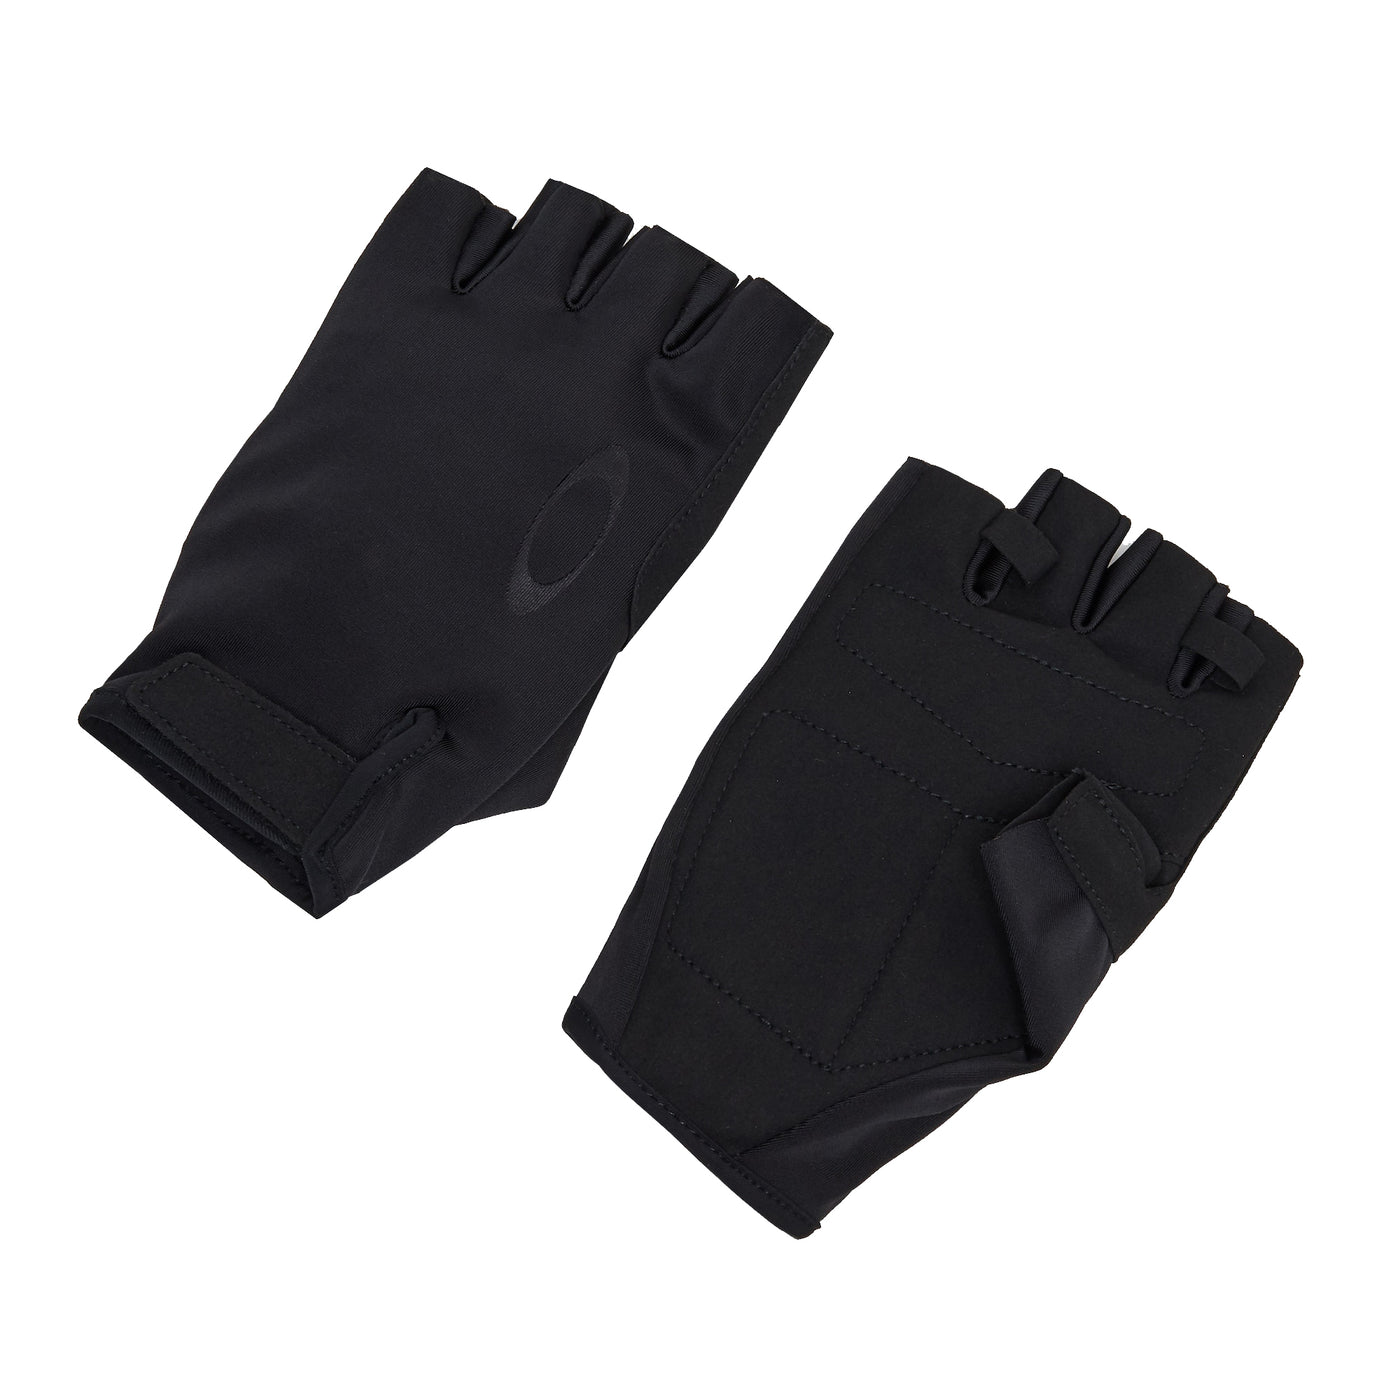 OAKLEY Gloves 2.0 JET BALCK